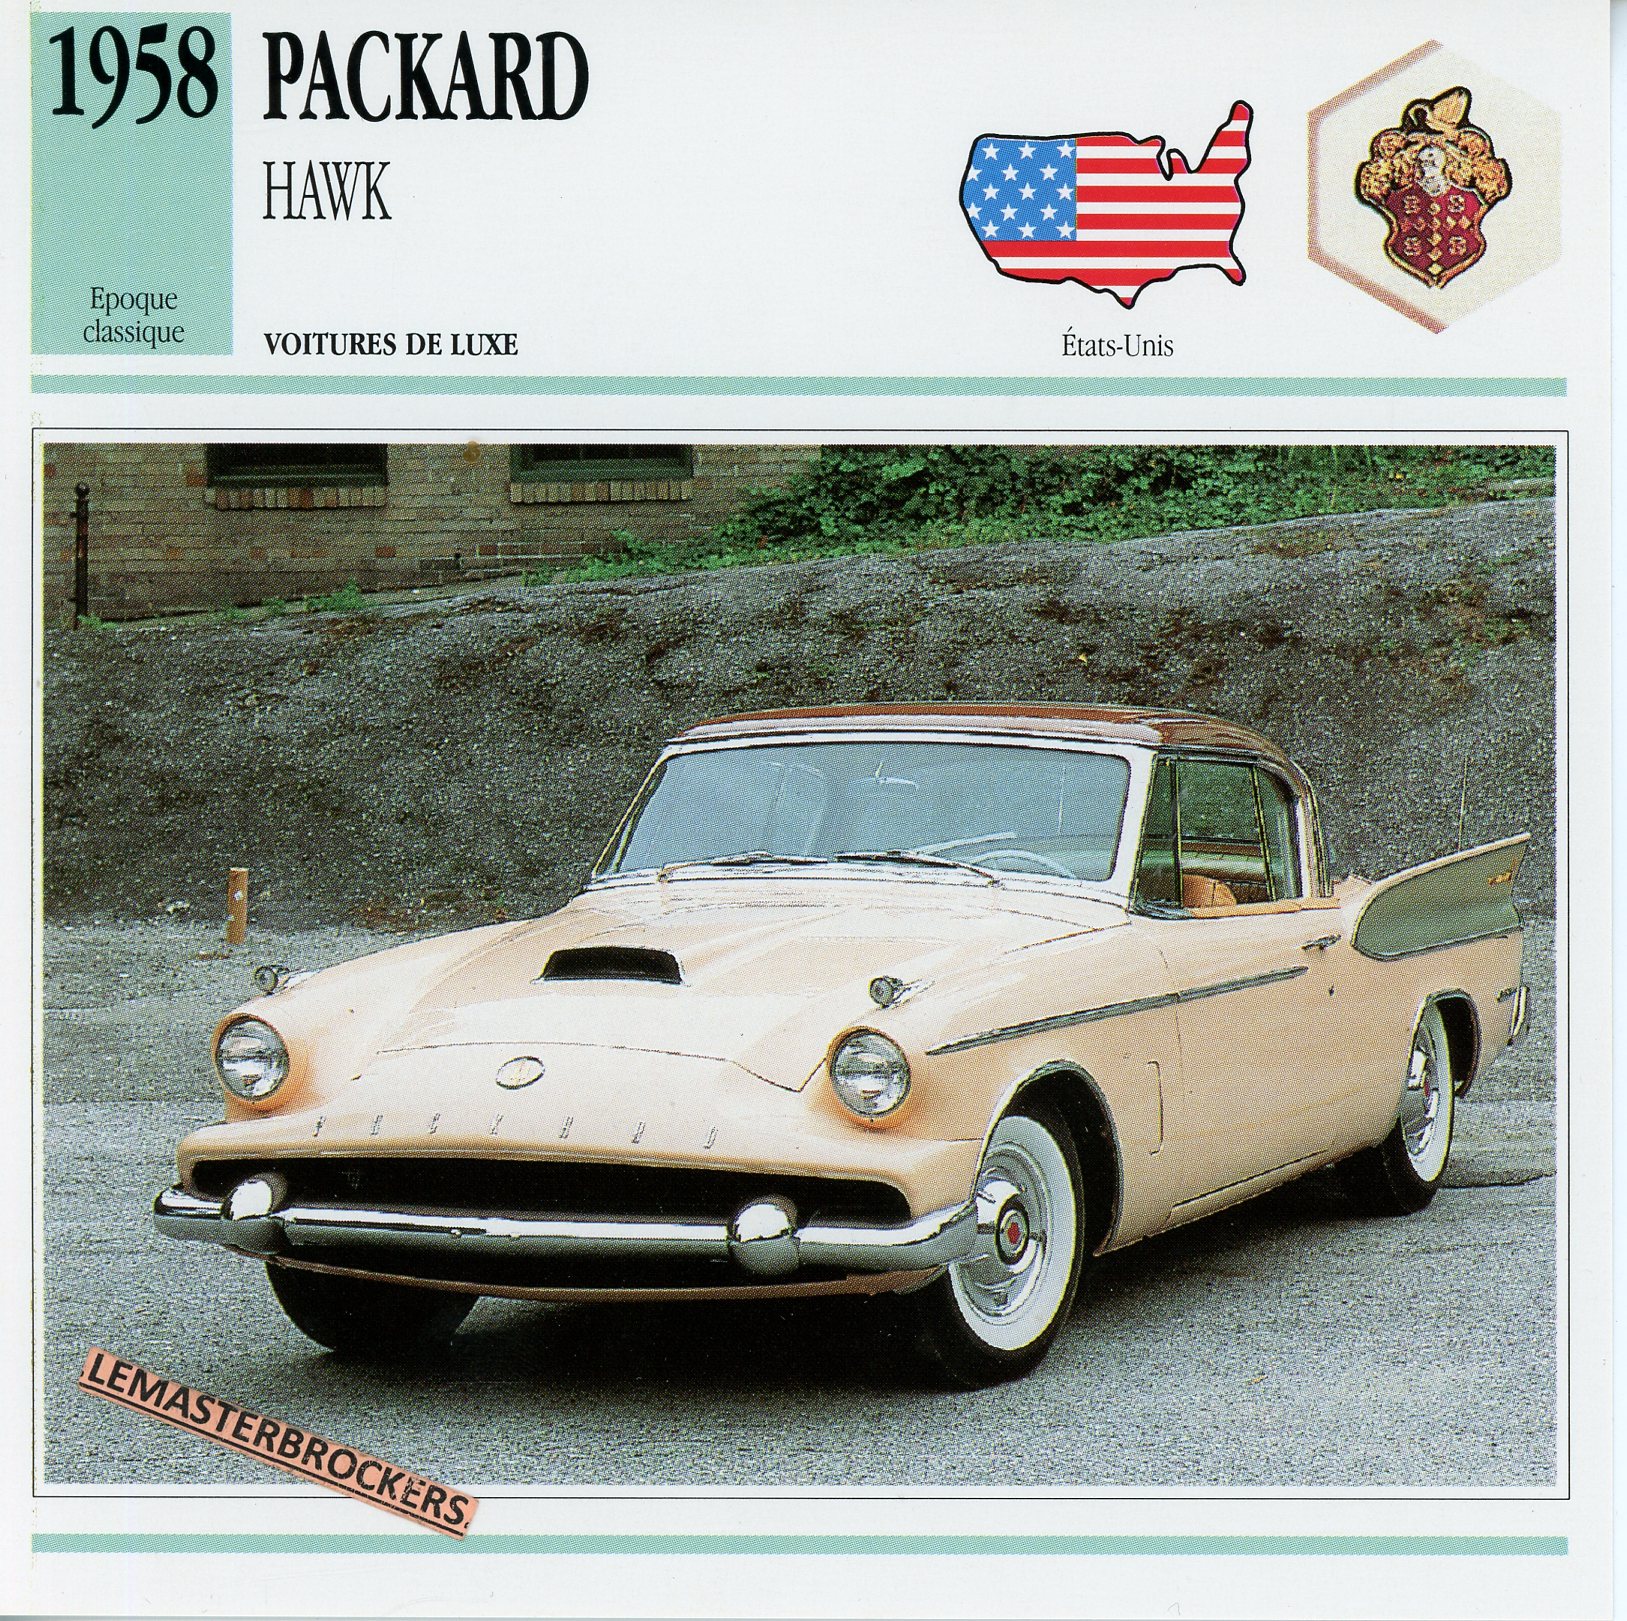 PACKARD-HAWK-1958-FICHE-CARS-CARD-ATLAS-LEMASTERBROCKERS